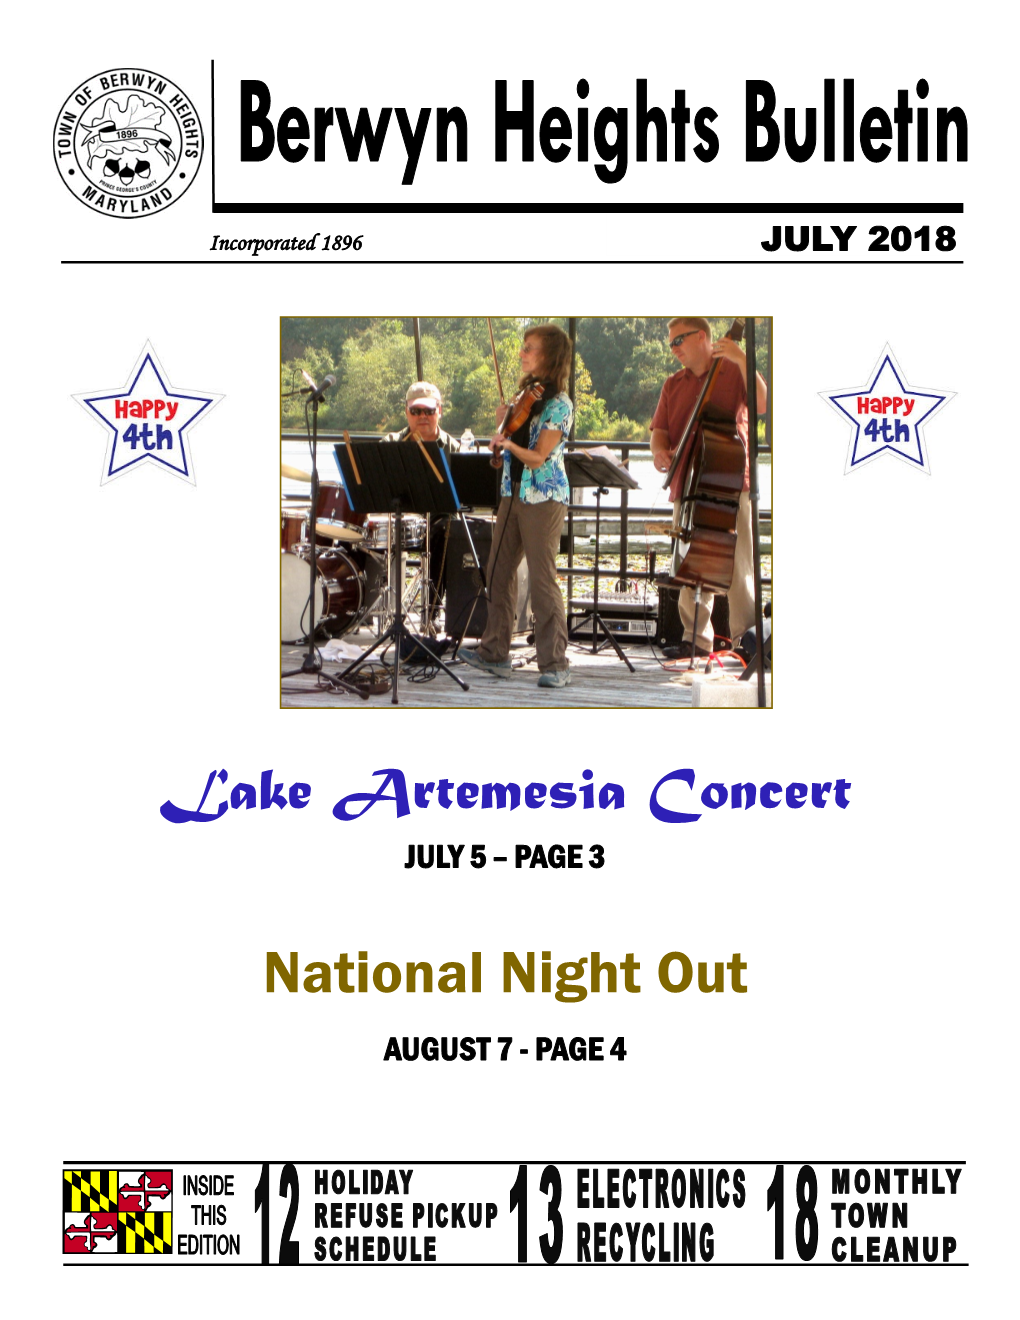 Lake Artemesia Concert National Night